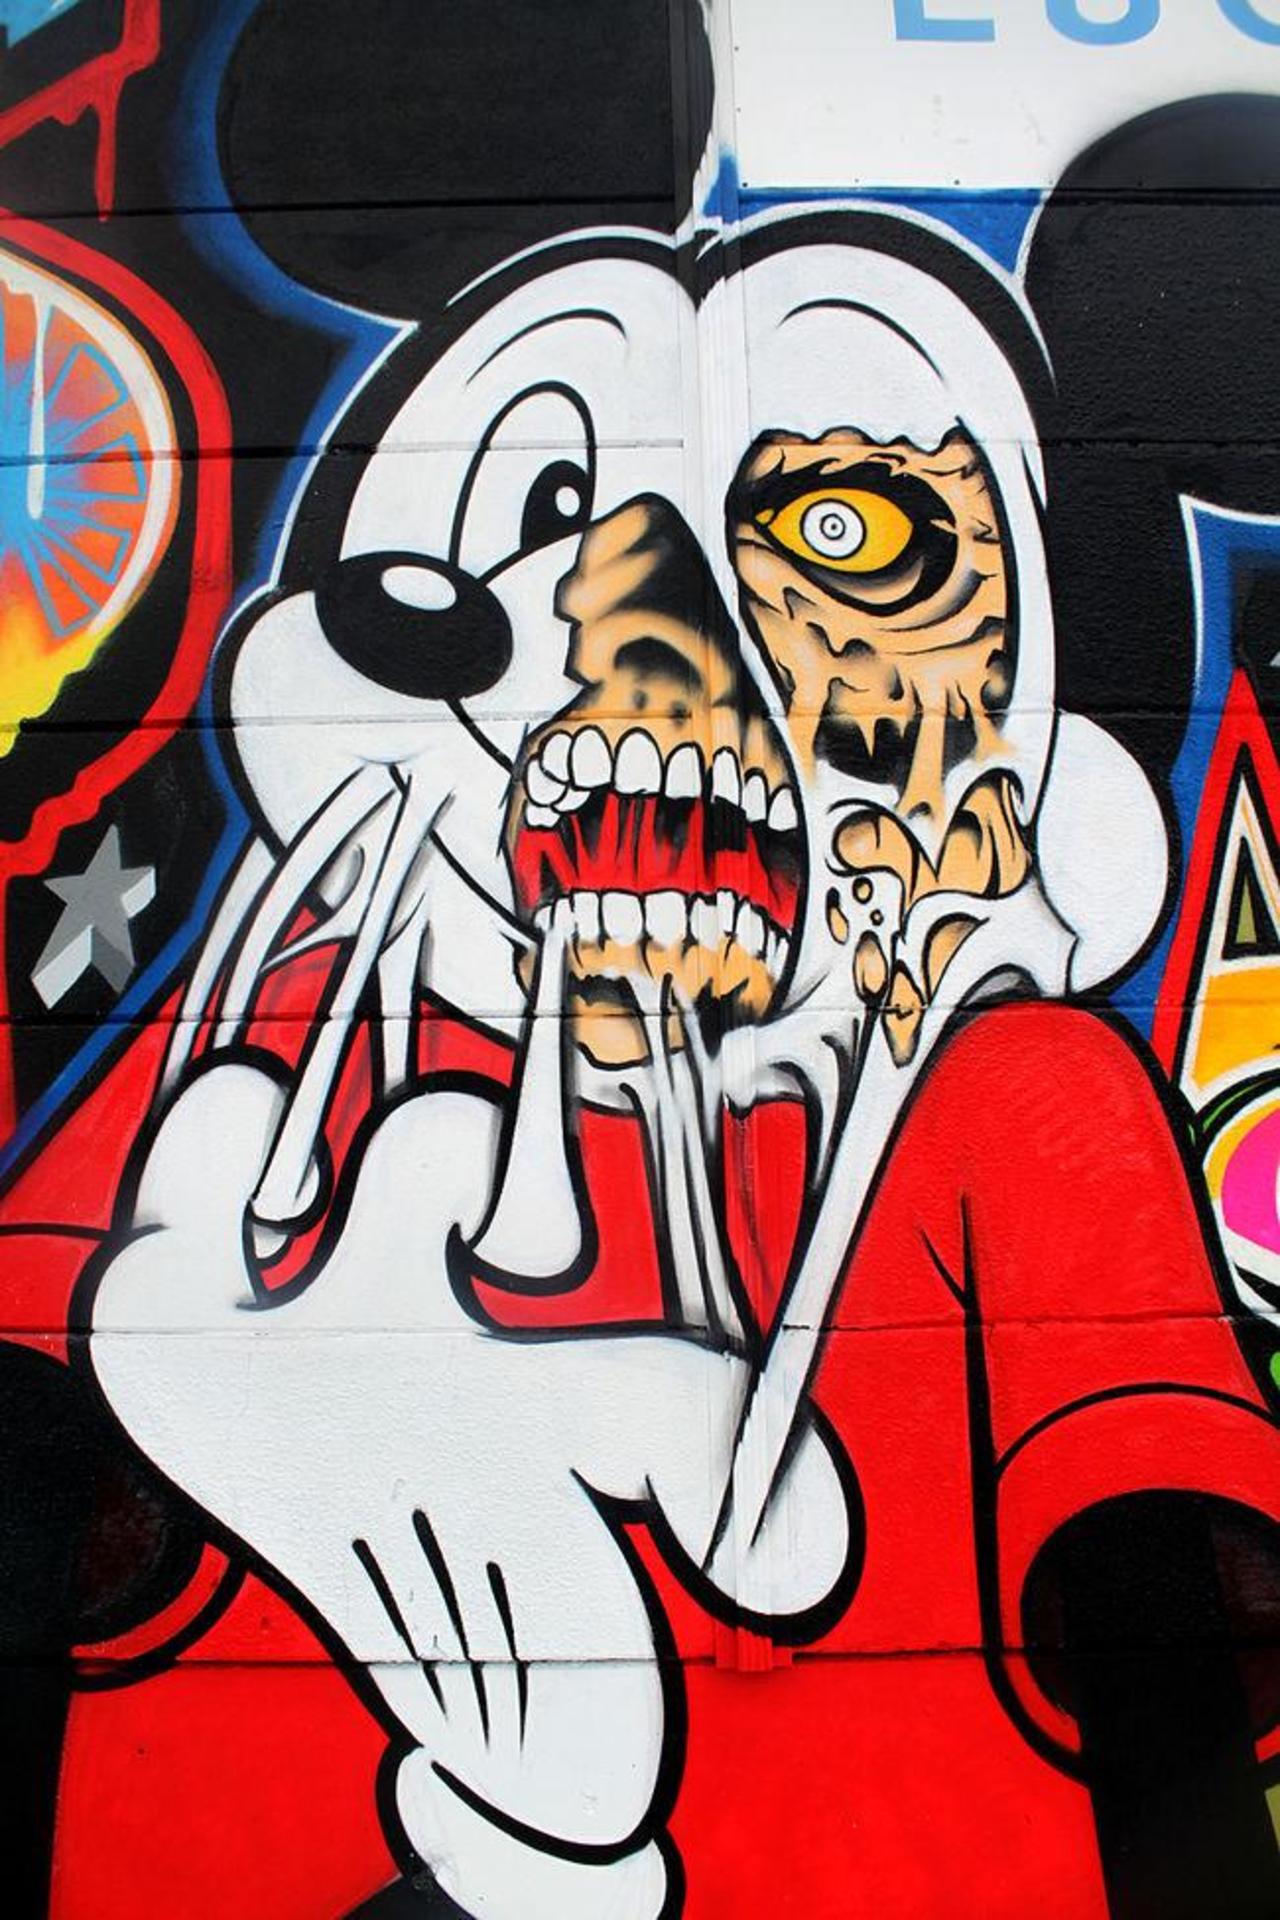 Street Art - Artist & Location unknown - #Art #StreetArt #Mickey #Paint #Graffiti #Graff - http://t.co/yZYVRNHSOr